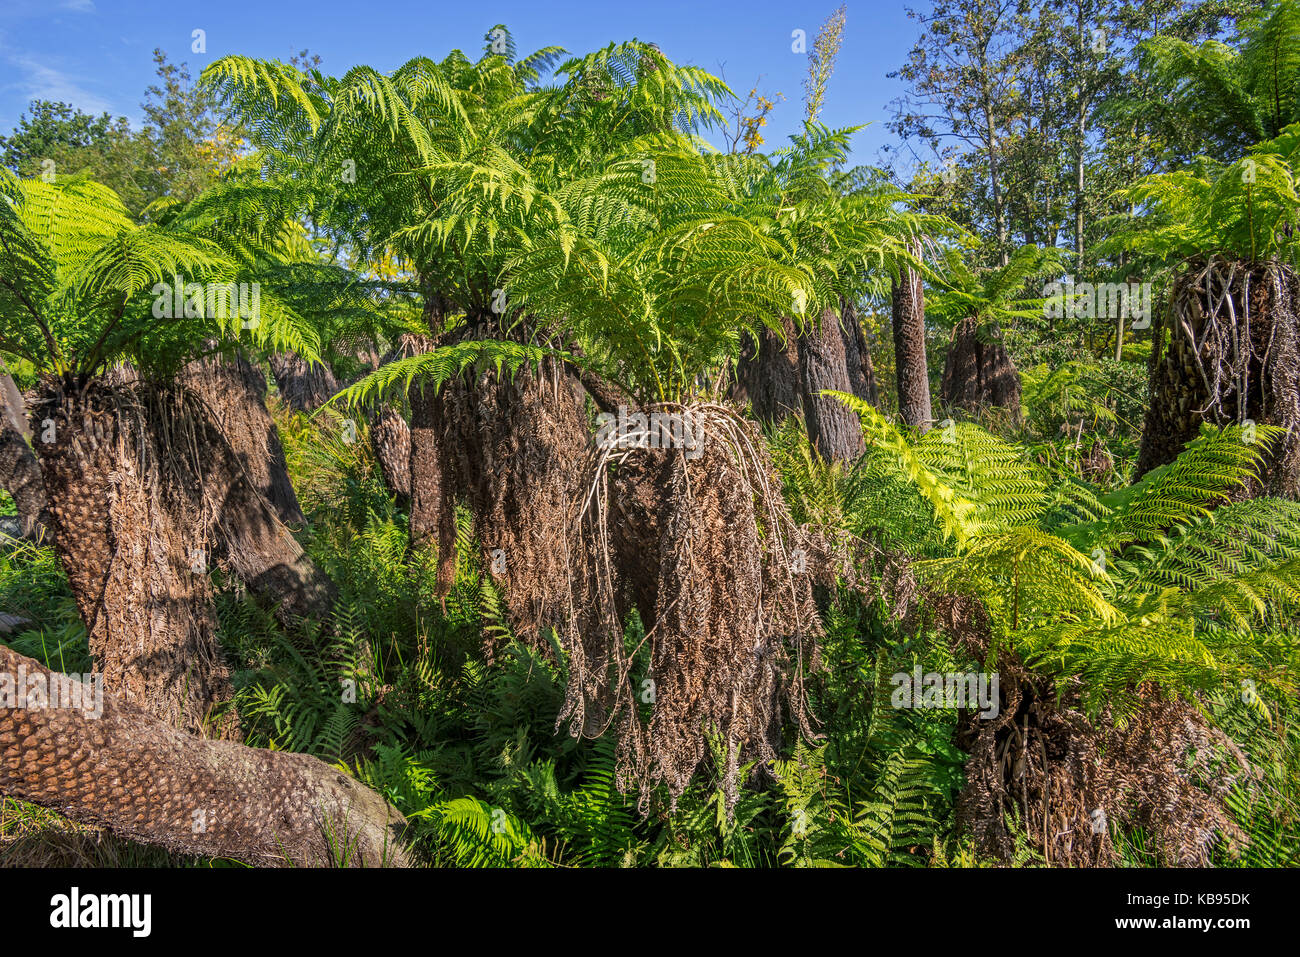 Soft felci arboree / uomo felci (Dicksonia Antartide) albero sempreverde fern nativo di Australia orientale Foto Stock